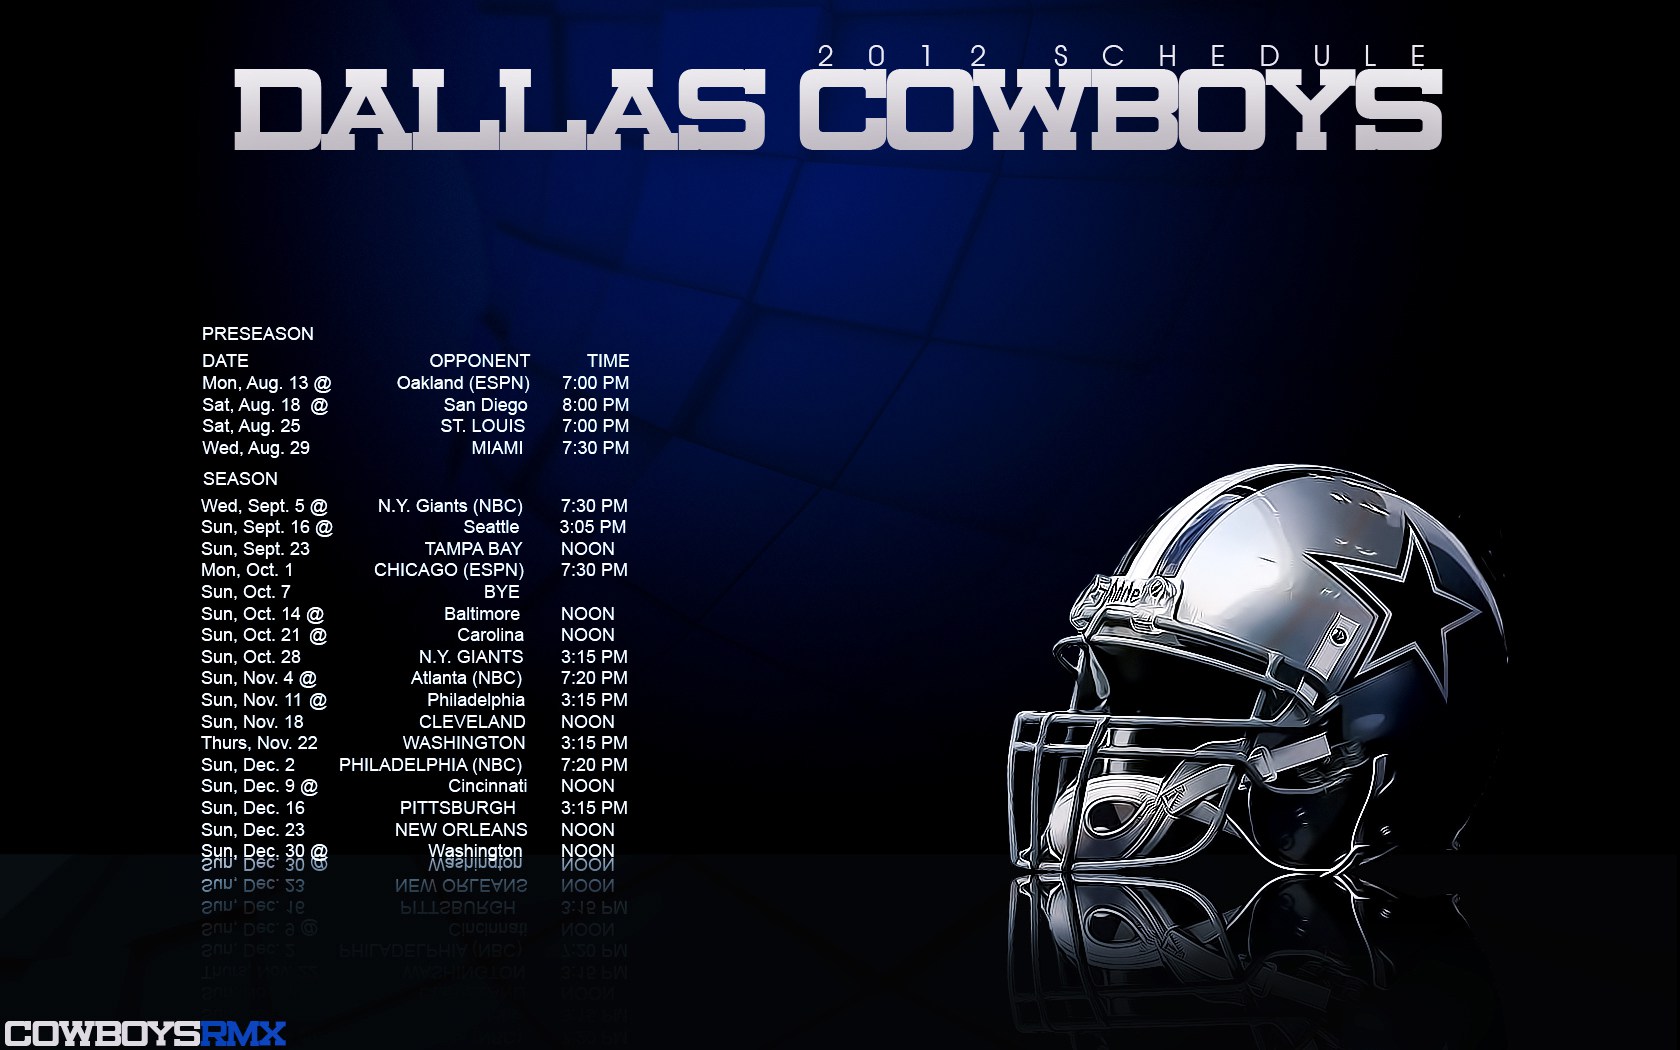  49 2016 Dallas Cowboys Schedule Wallpaper on WallpaperSafari